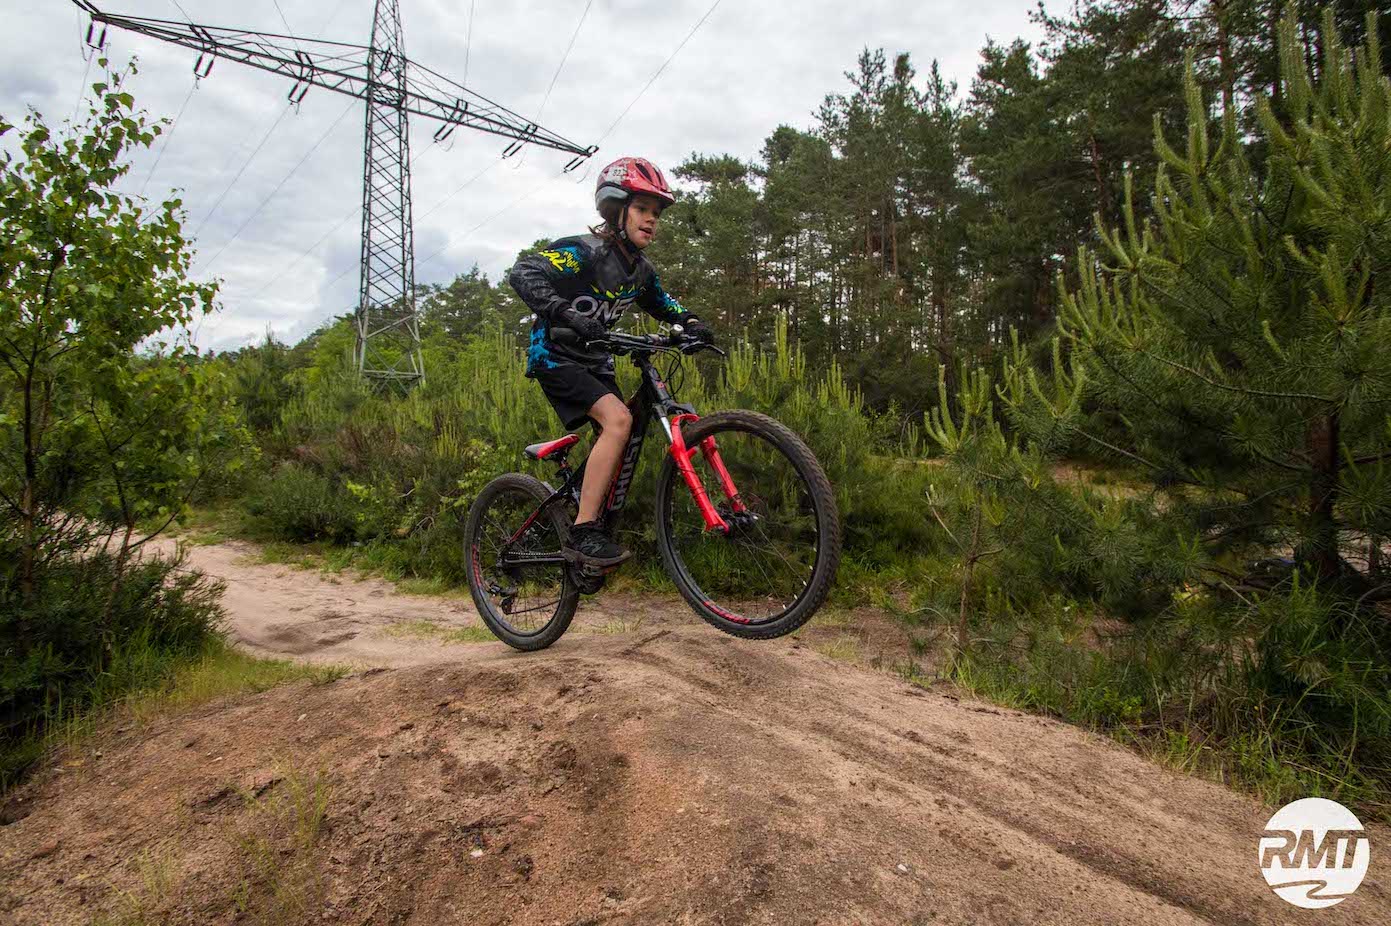 Mountainbike Kinder Kurs in Ravensburg - 8-12 Jahre Kids - Rock my Trail Fahrtechnik Bikeschule